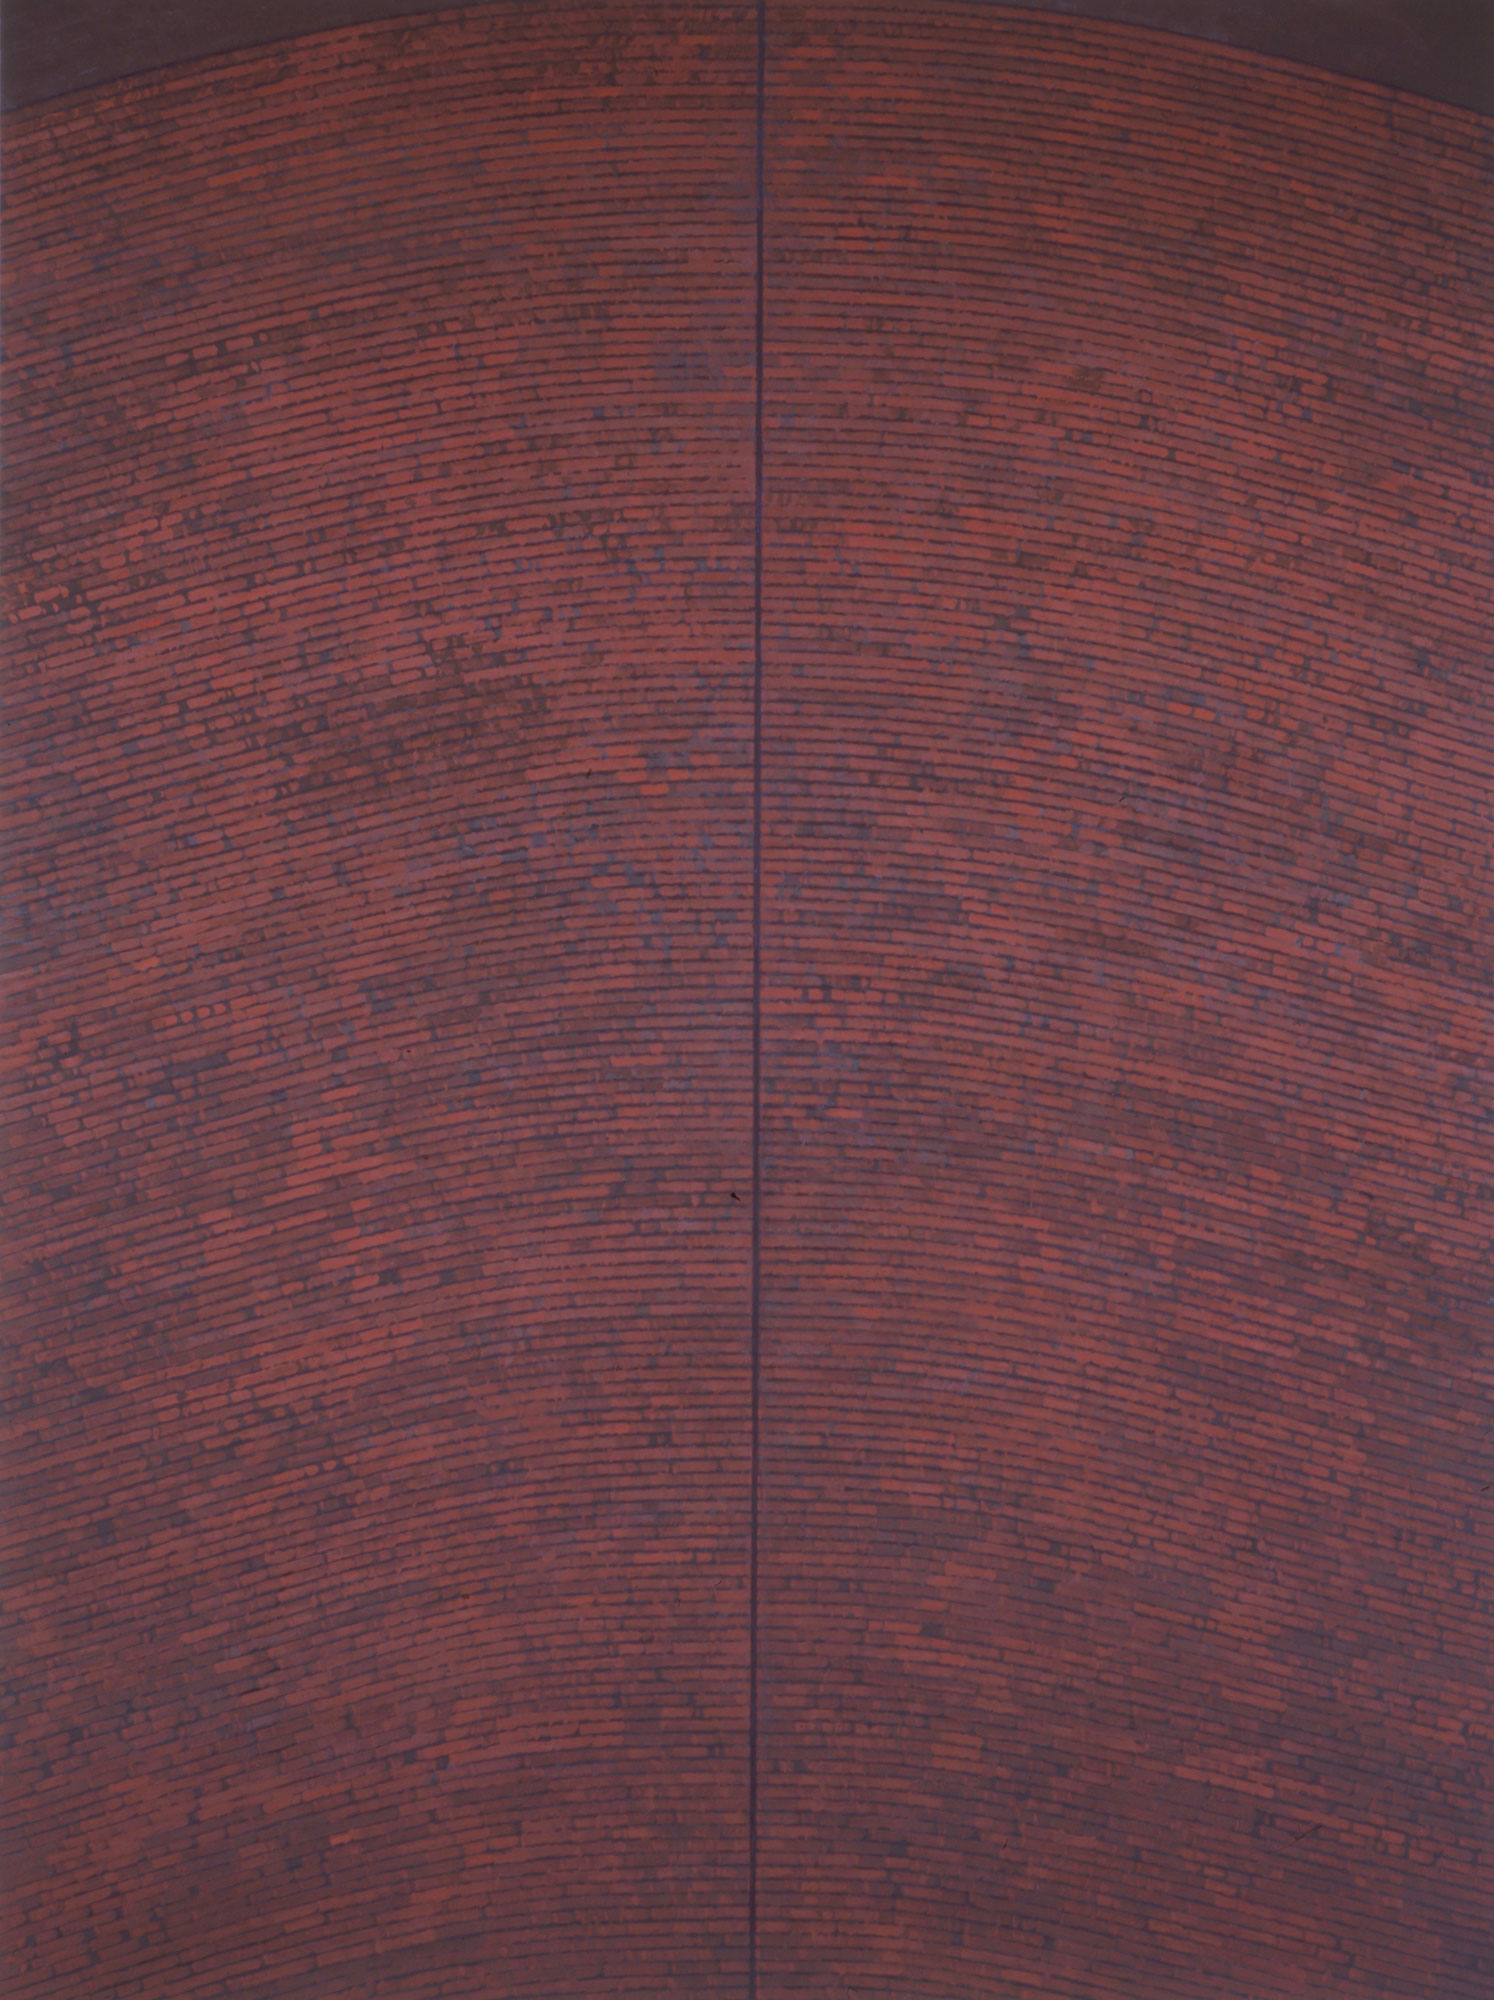 Kenneth Dingwall, Then, 1995 6, oil and wax on canvas, 214cm x 160cm